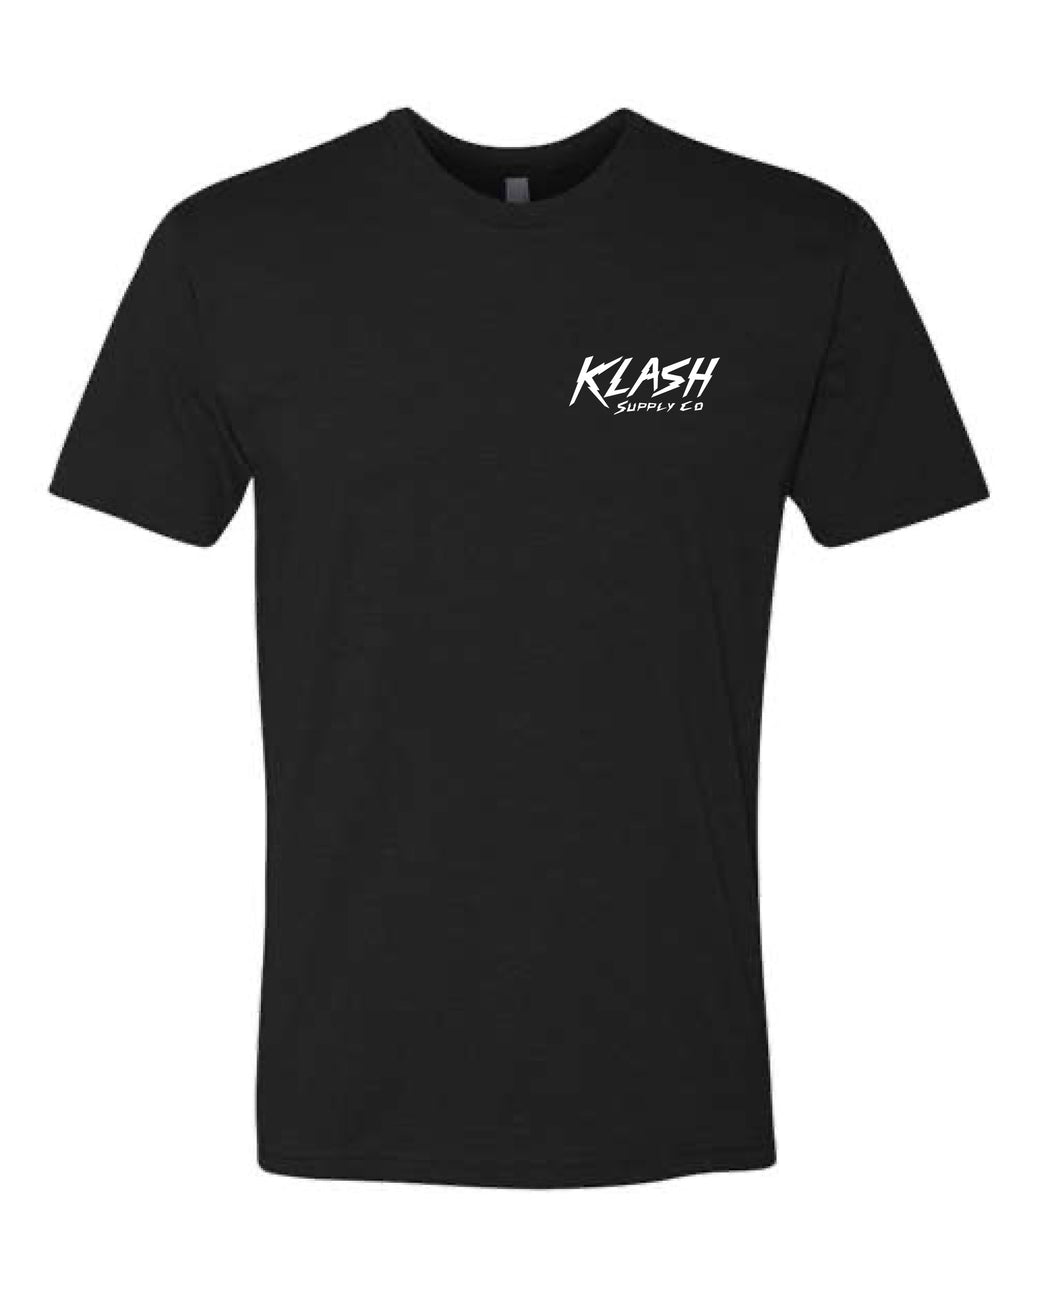 The Original Klash